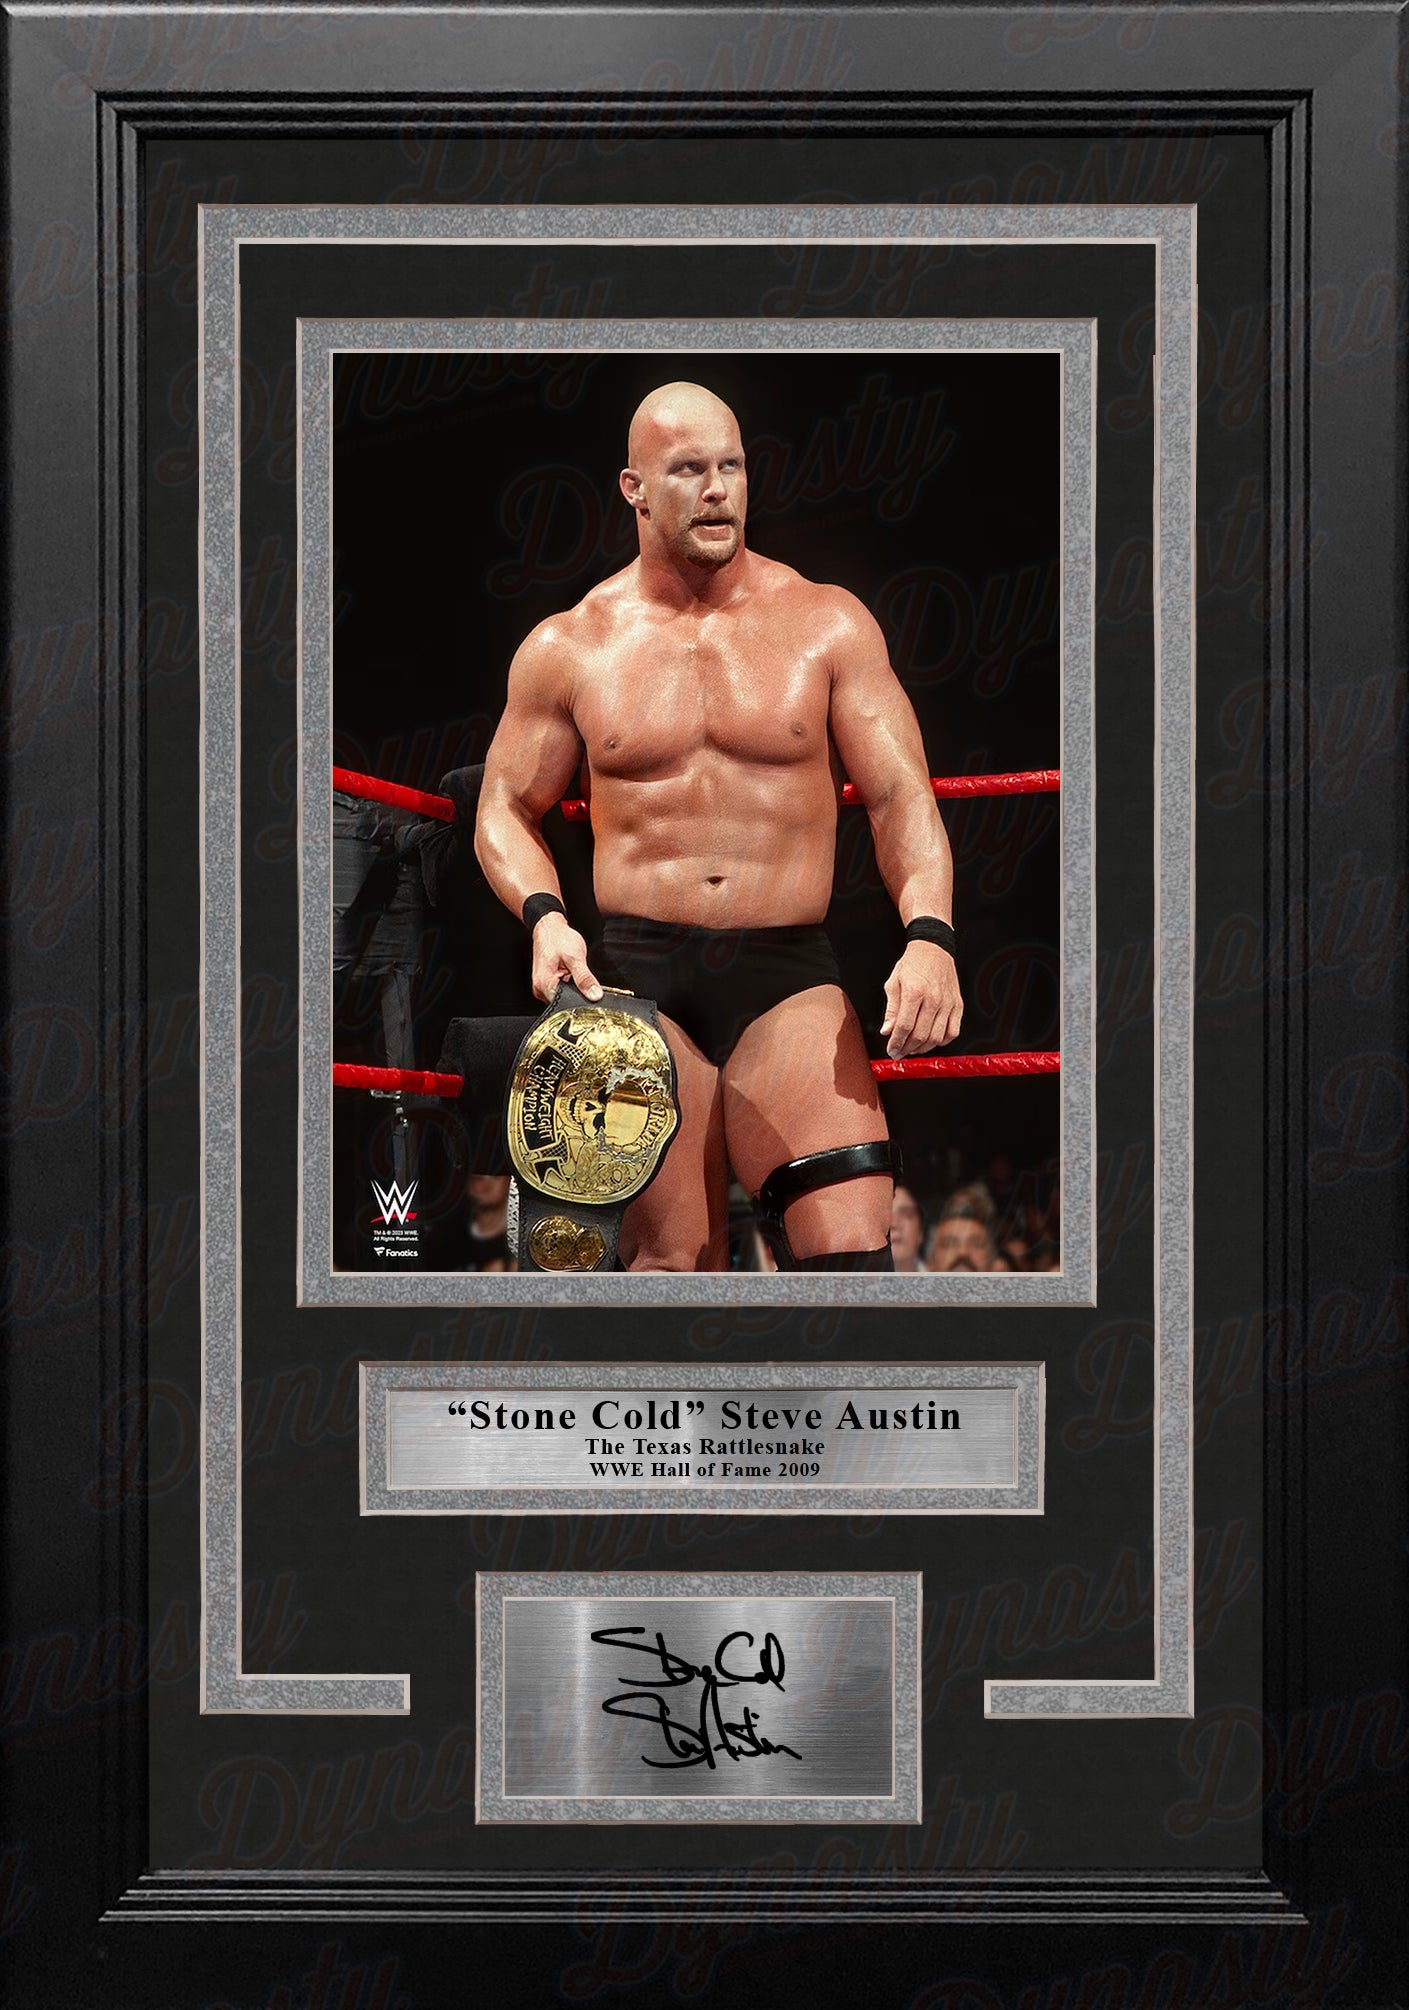 Stone Cold Steve Austin Smoking Skull Belt 8x10 Framed WWE Wrestling Photo  with Engraved Autograph